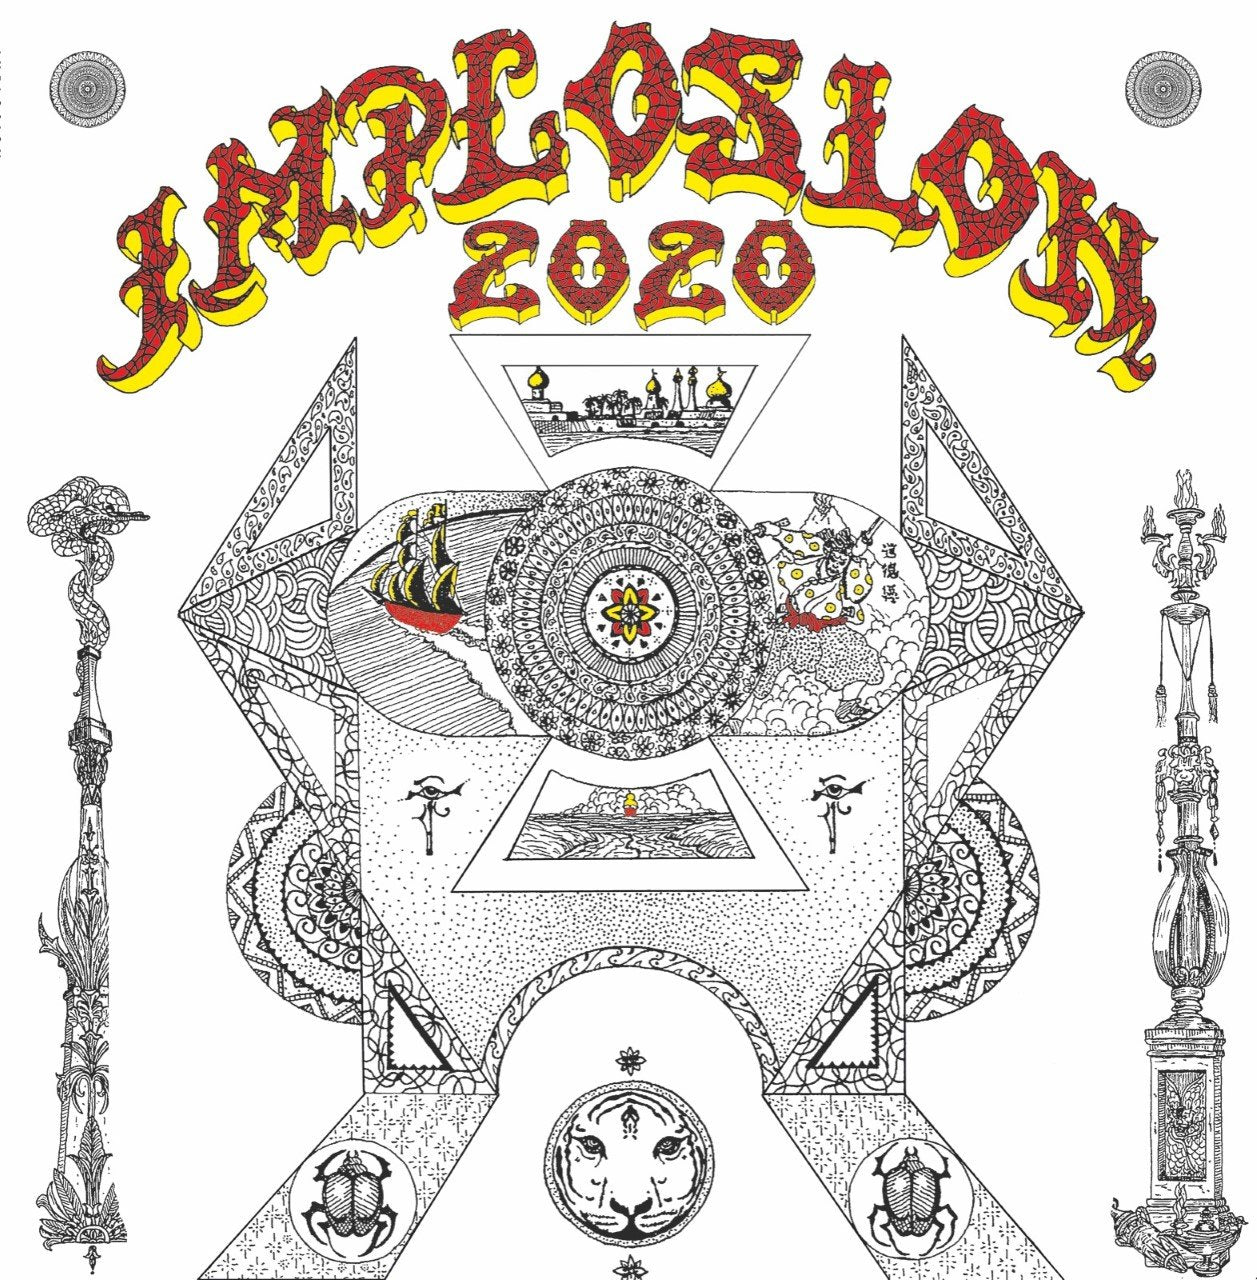 Implosion - 2020